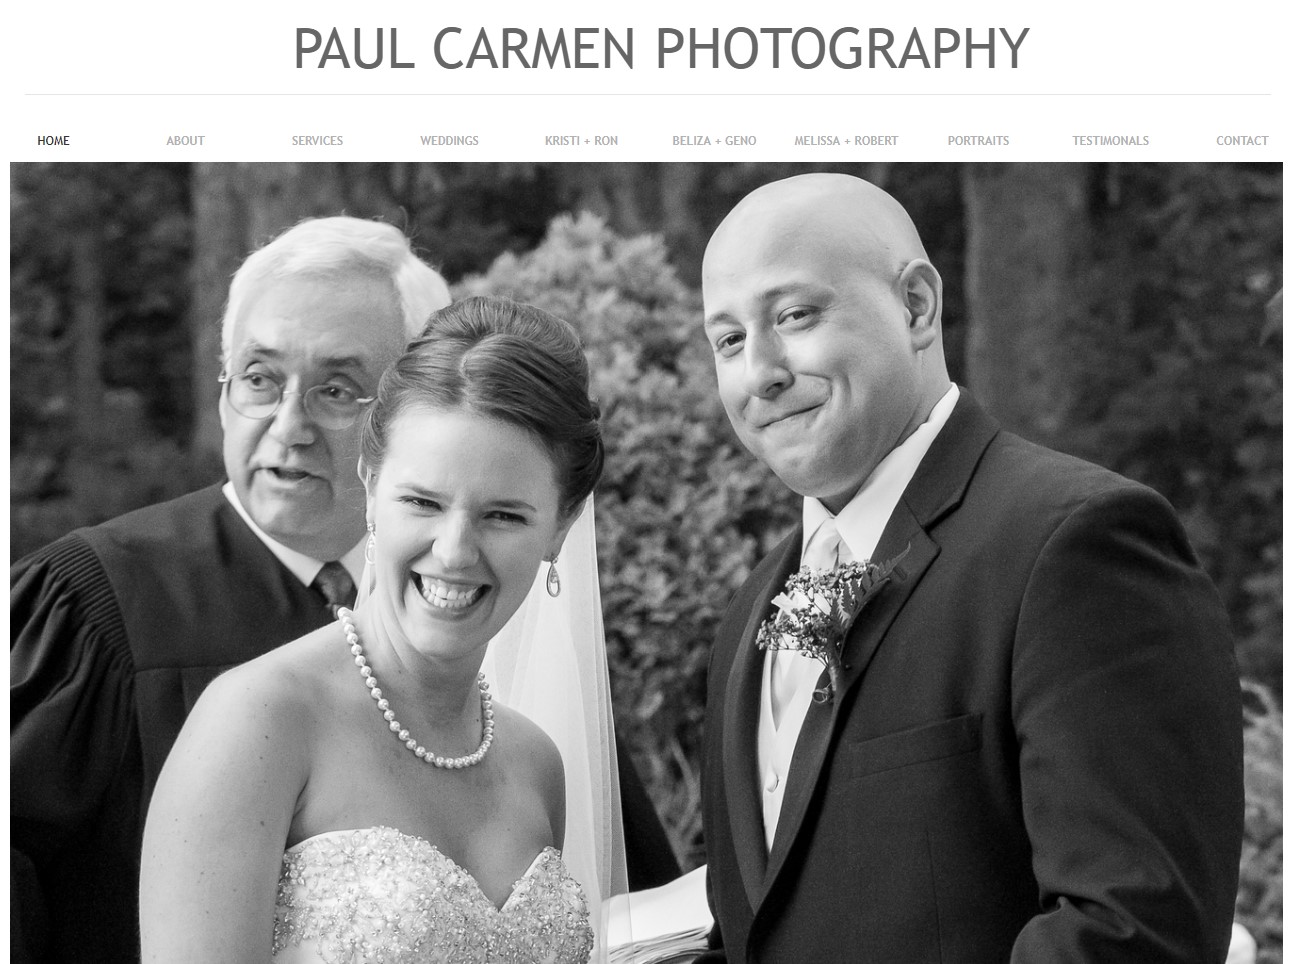 Paul Carmen Photography